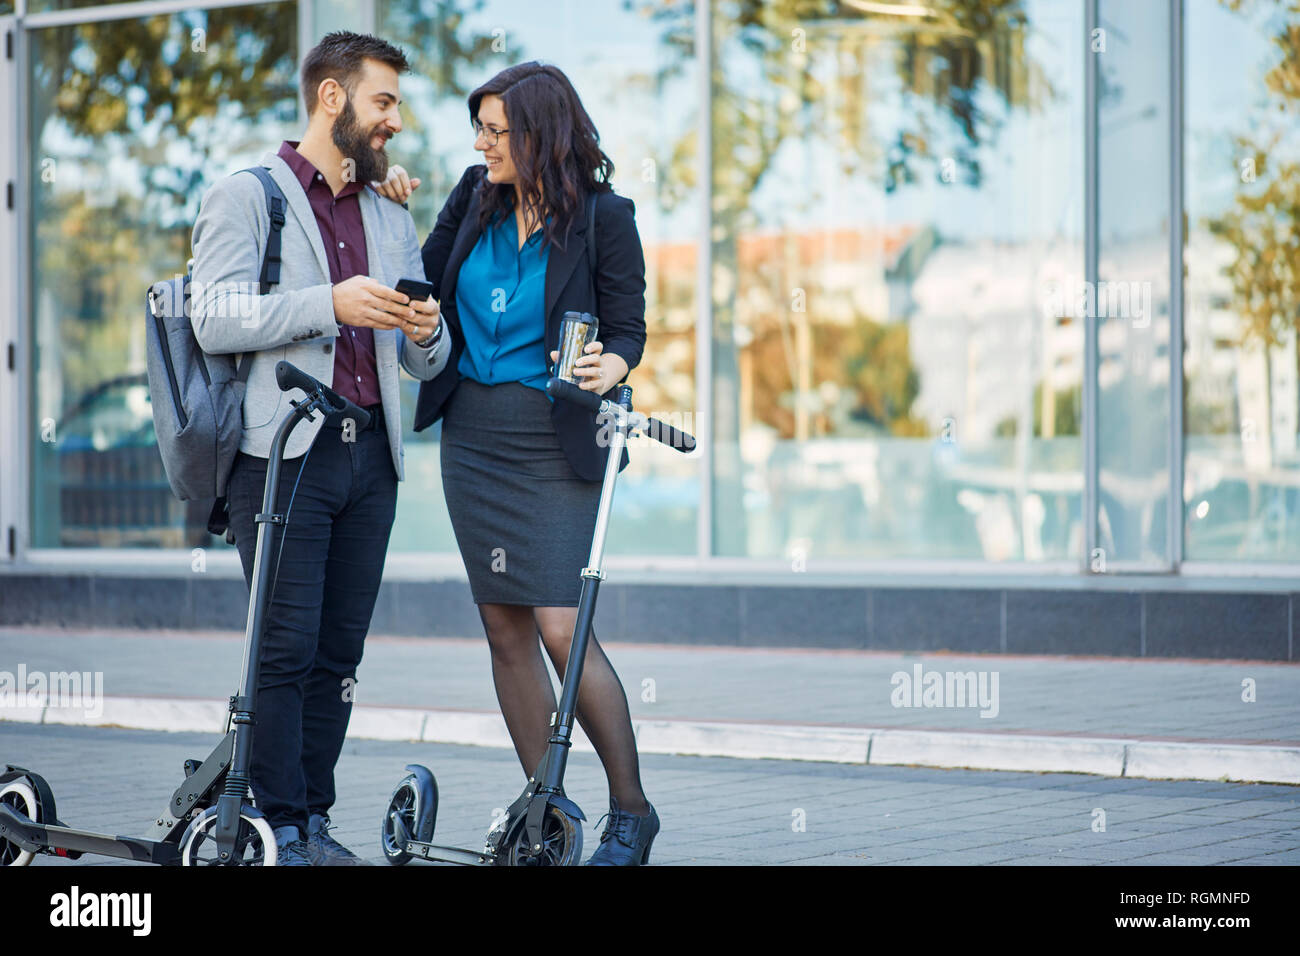 Imprenditore sorridente e imprenditrice con scooter parlando sul marciapiede Foto Stock